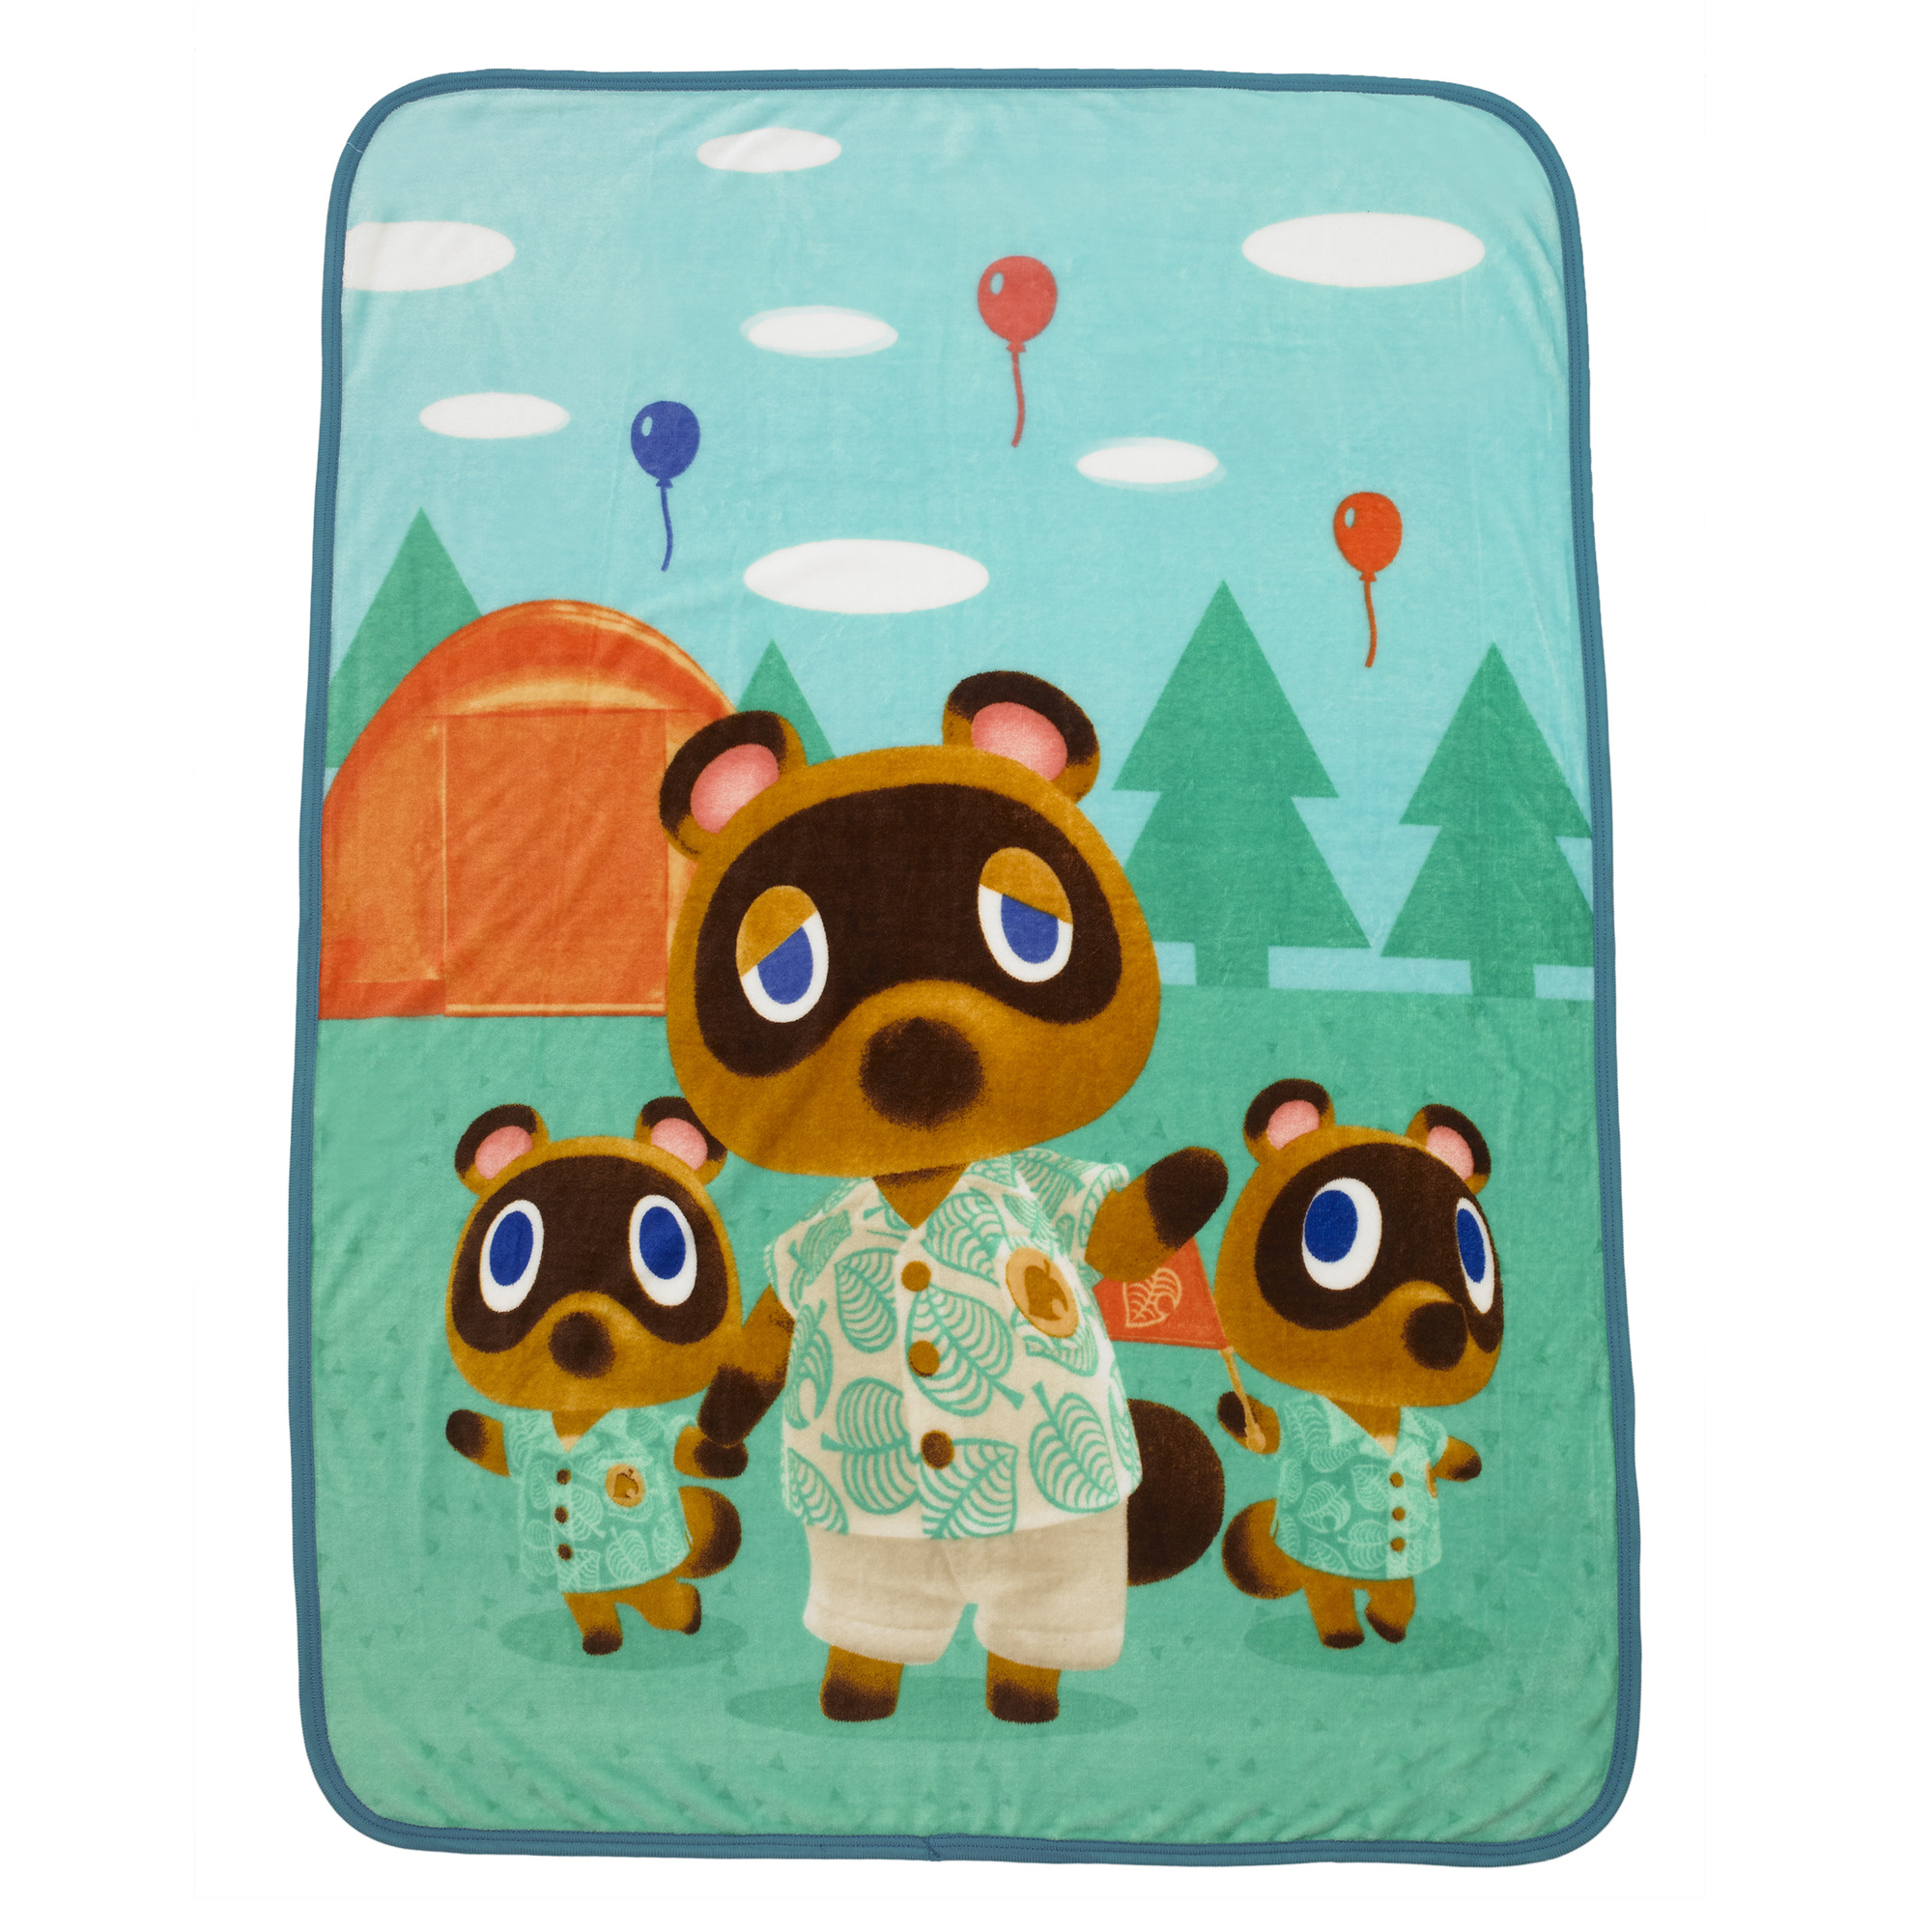 Animal Crossing Kids Silky Soft Plush Throw Blanket, 40 x 50, Gaming Bedding, Green - image 2 of 6